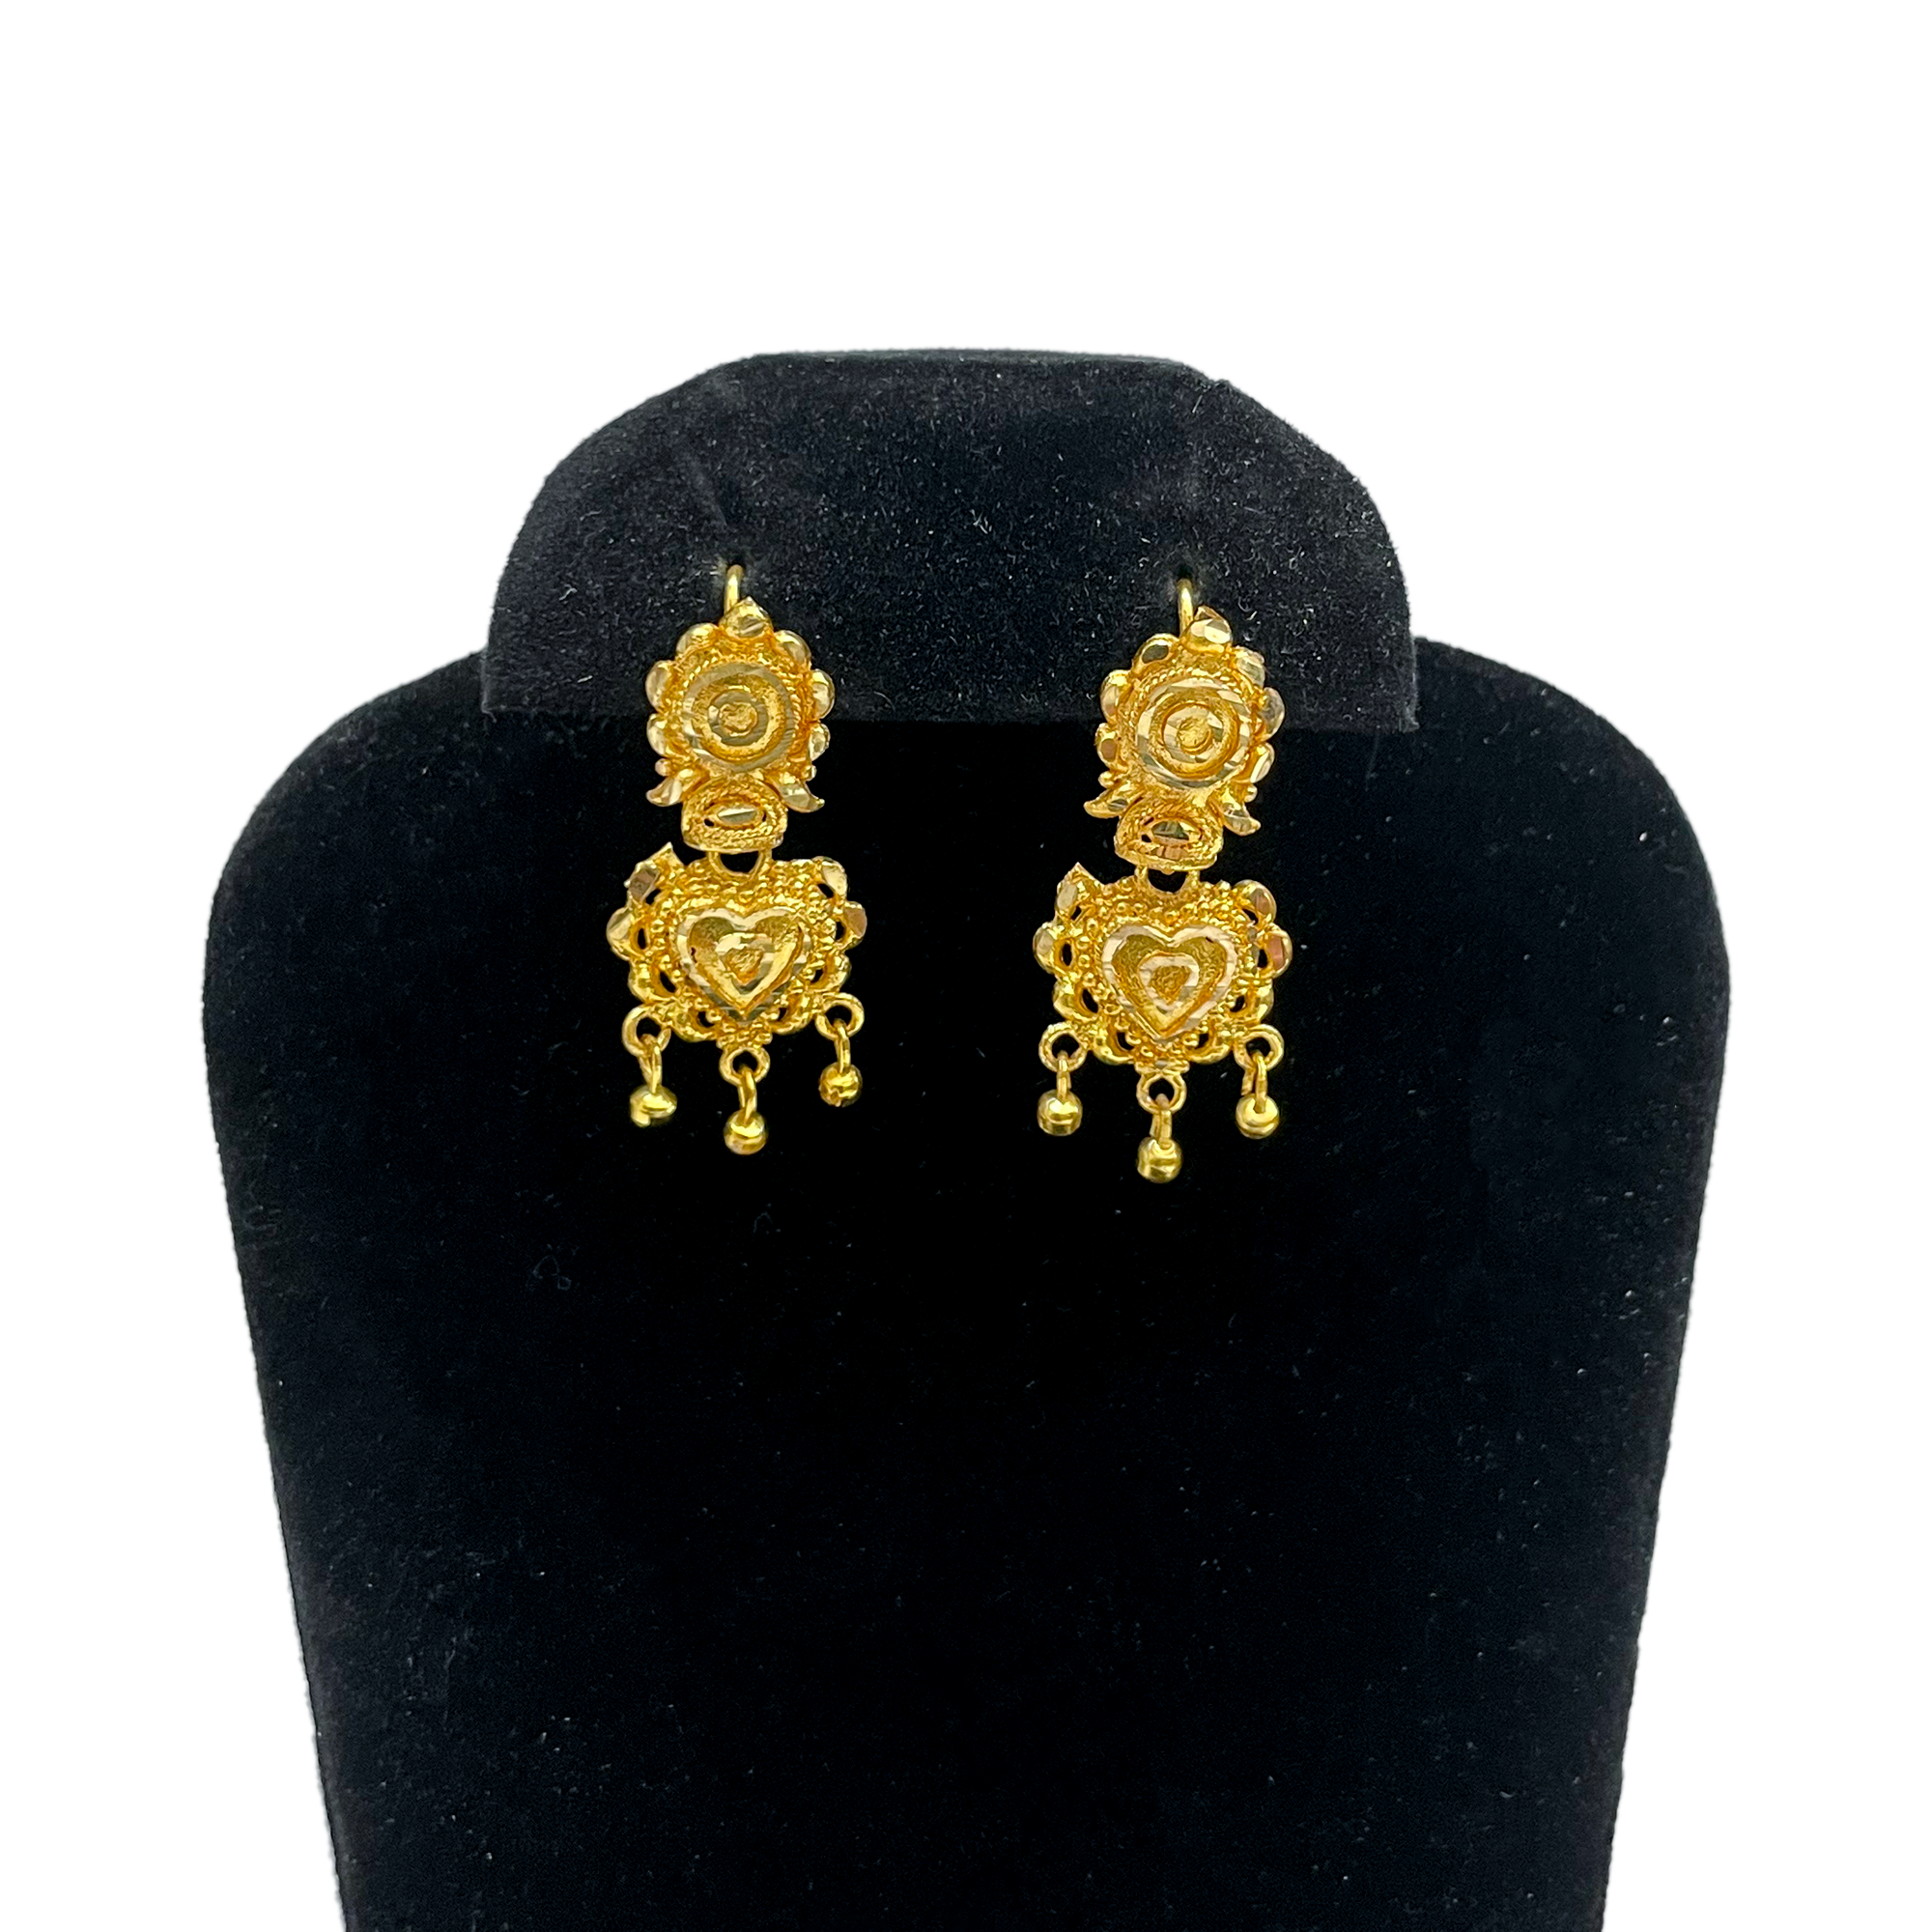 gold plated oxidised earrings, wedding earrings, daily wearing earrings